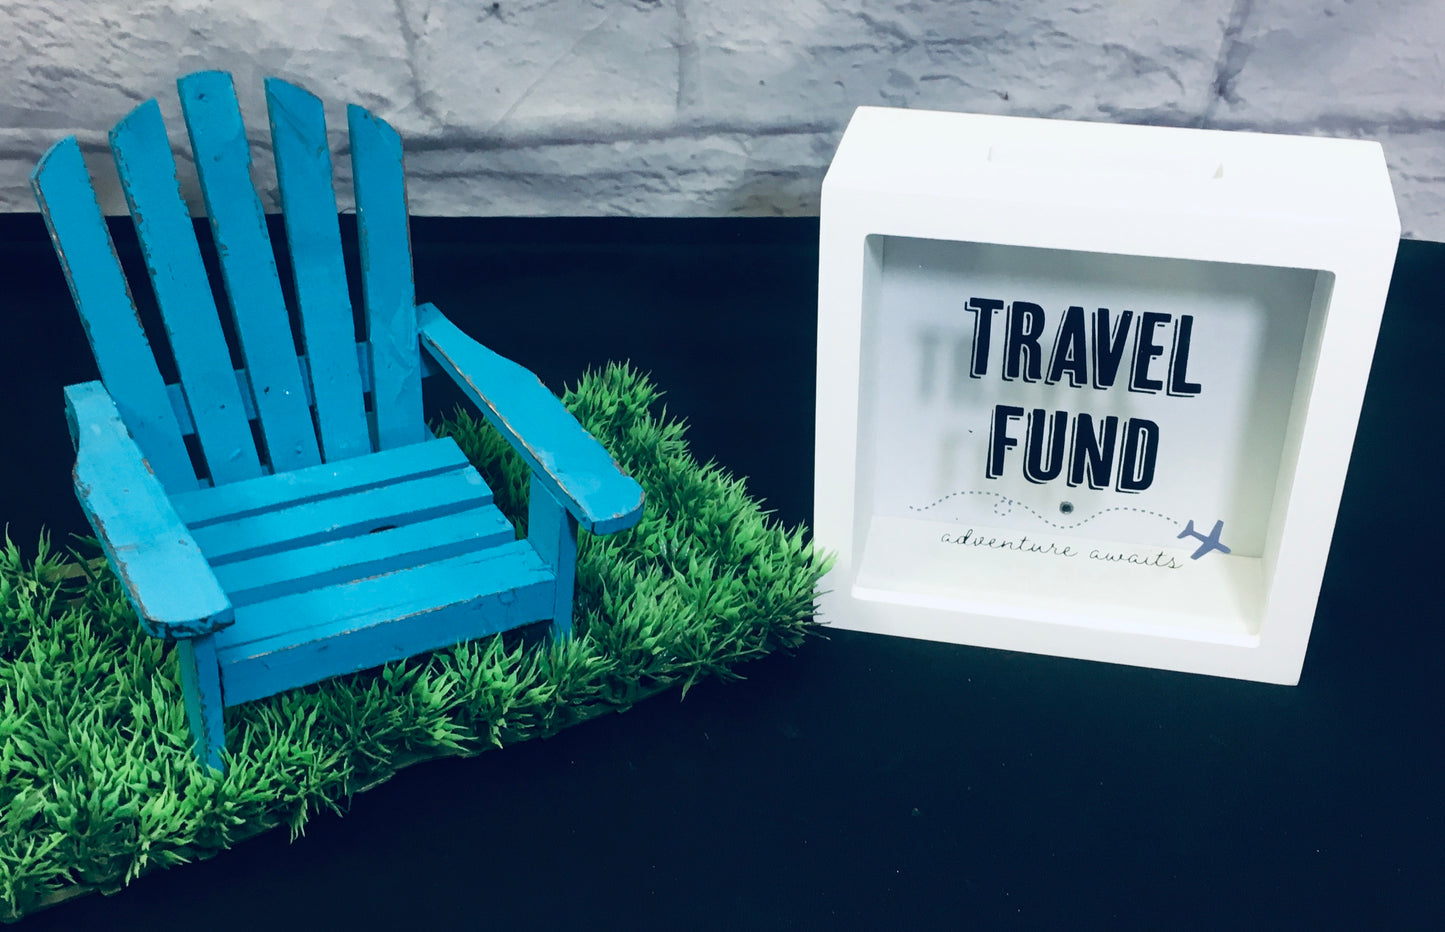 Travel fund box